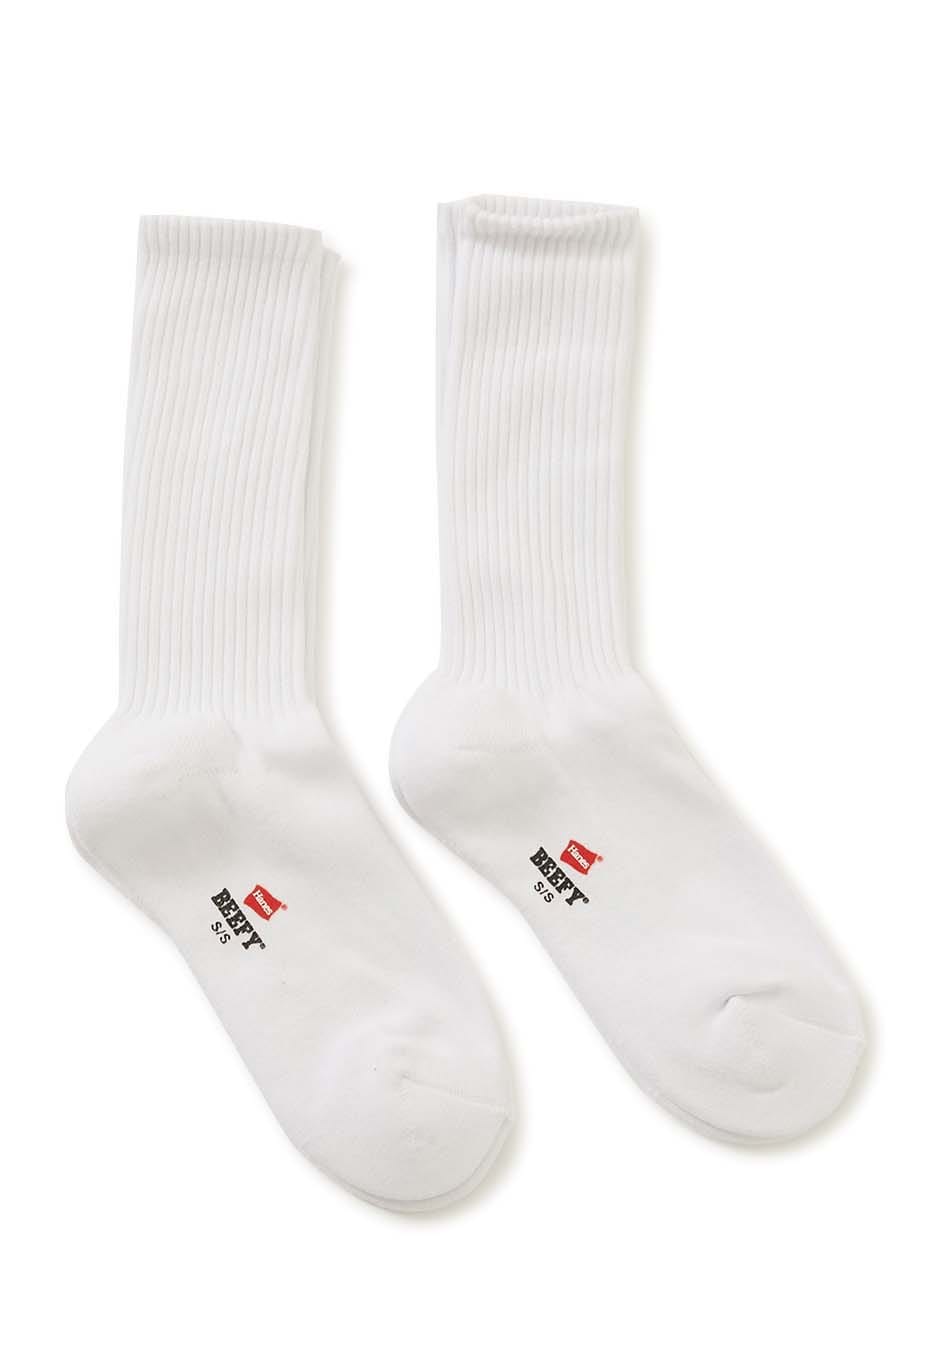 59% reduction of Hanes Curves Opaque ComfortFlex Band Plus Socks - 2 Pair  HSP021 Online